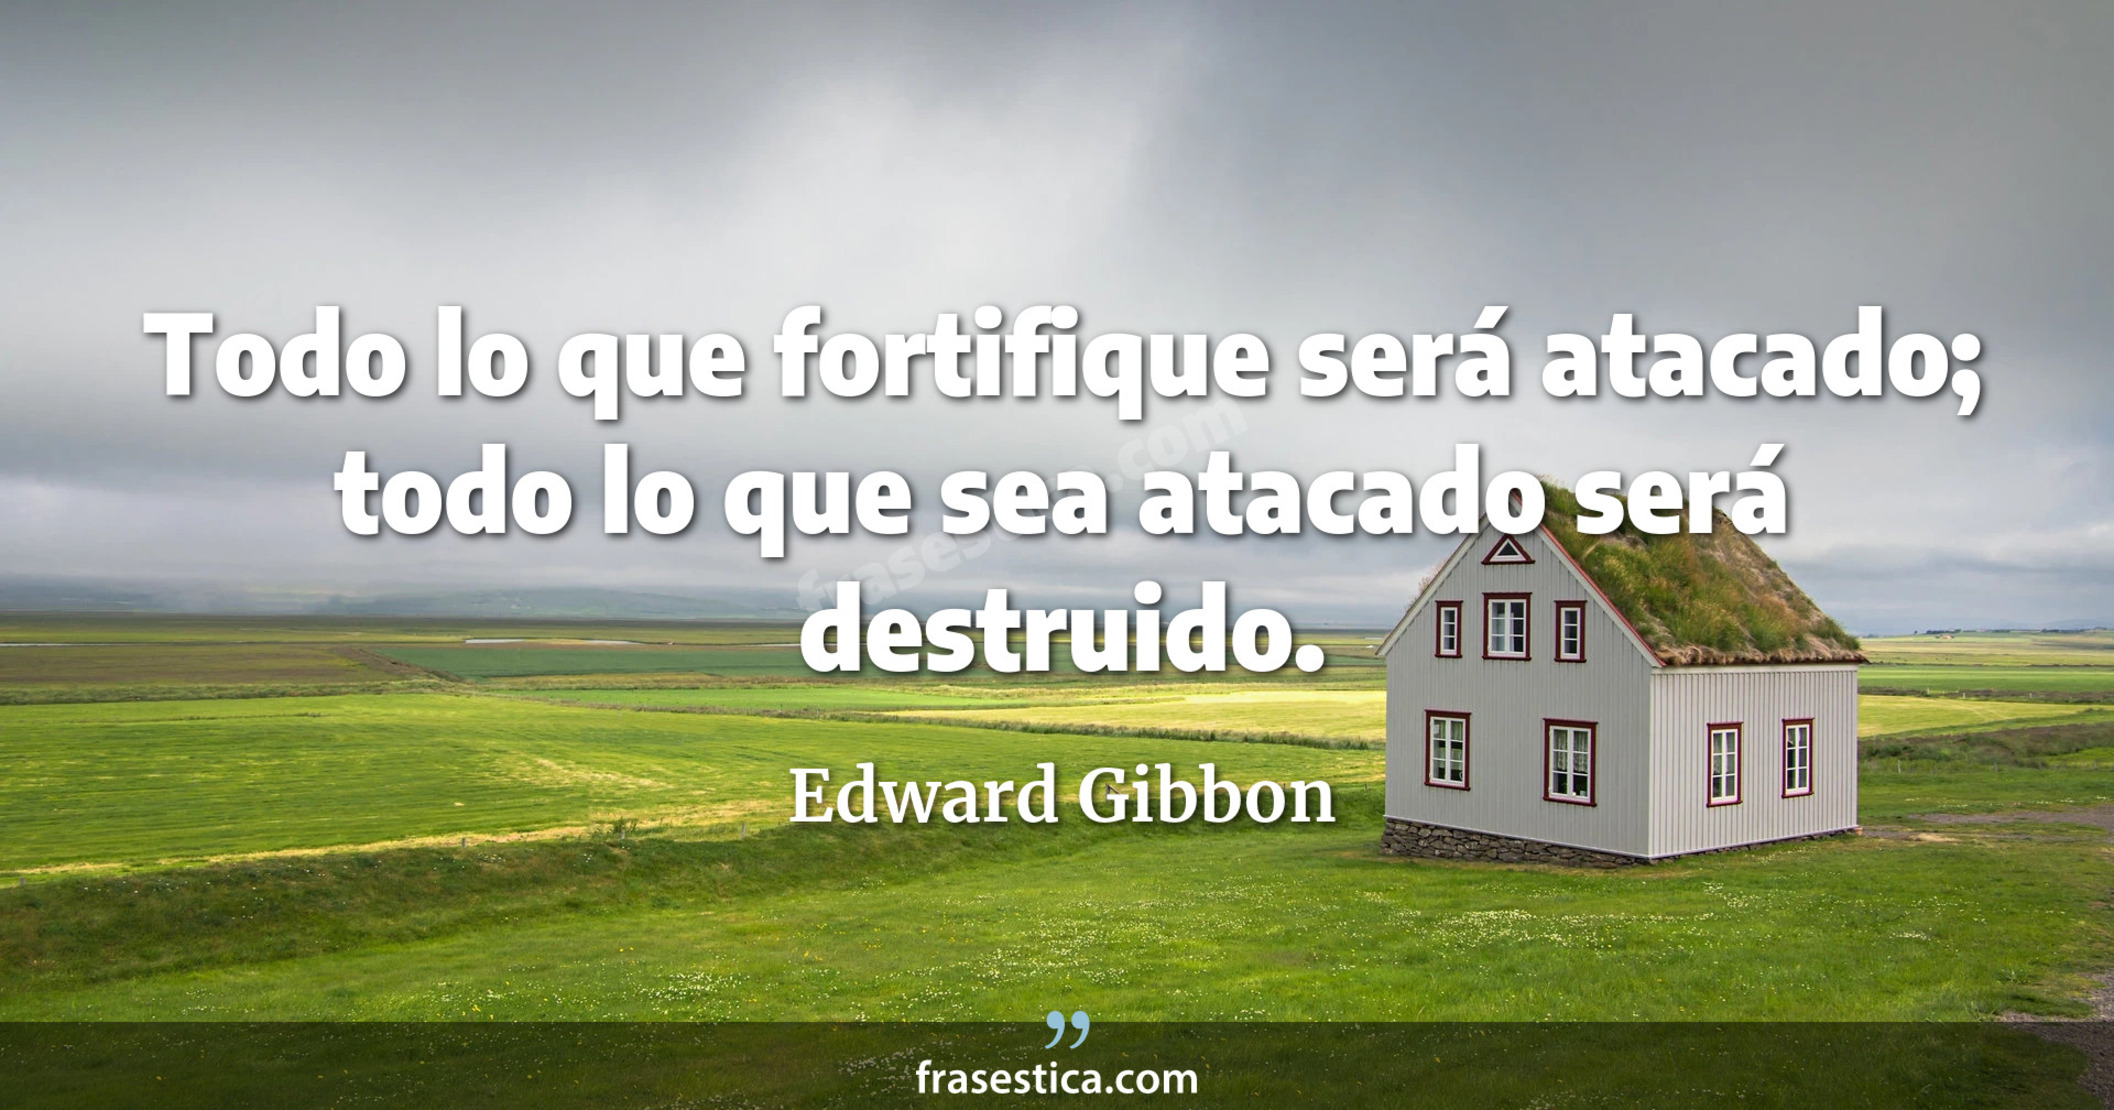 Todo lo que fortifique será atacado; todo lo que sea atacado será destruido. - Edward Gibbon